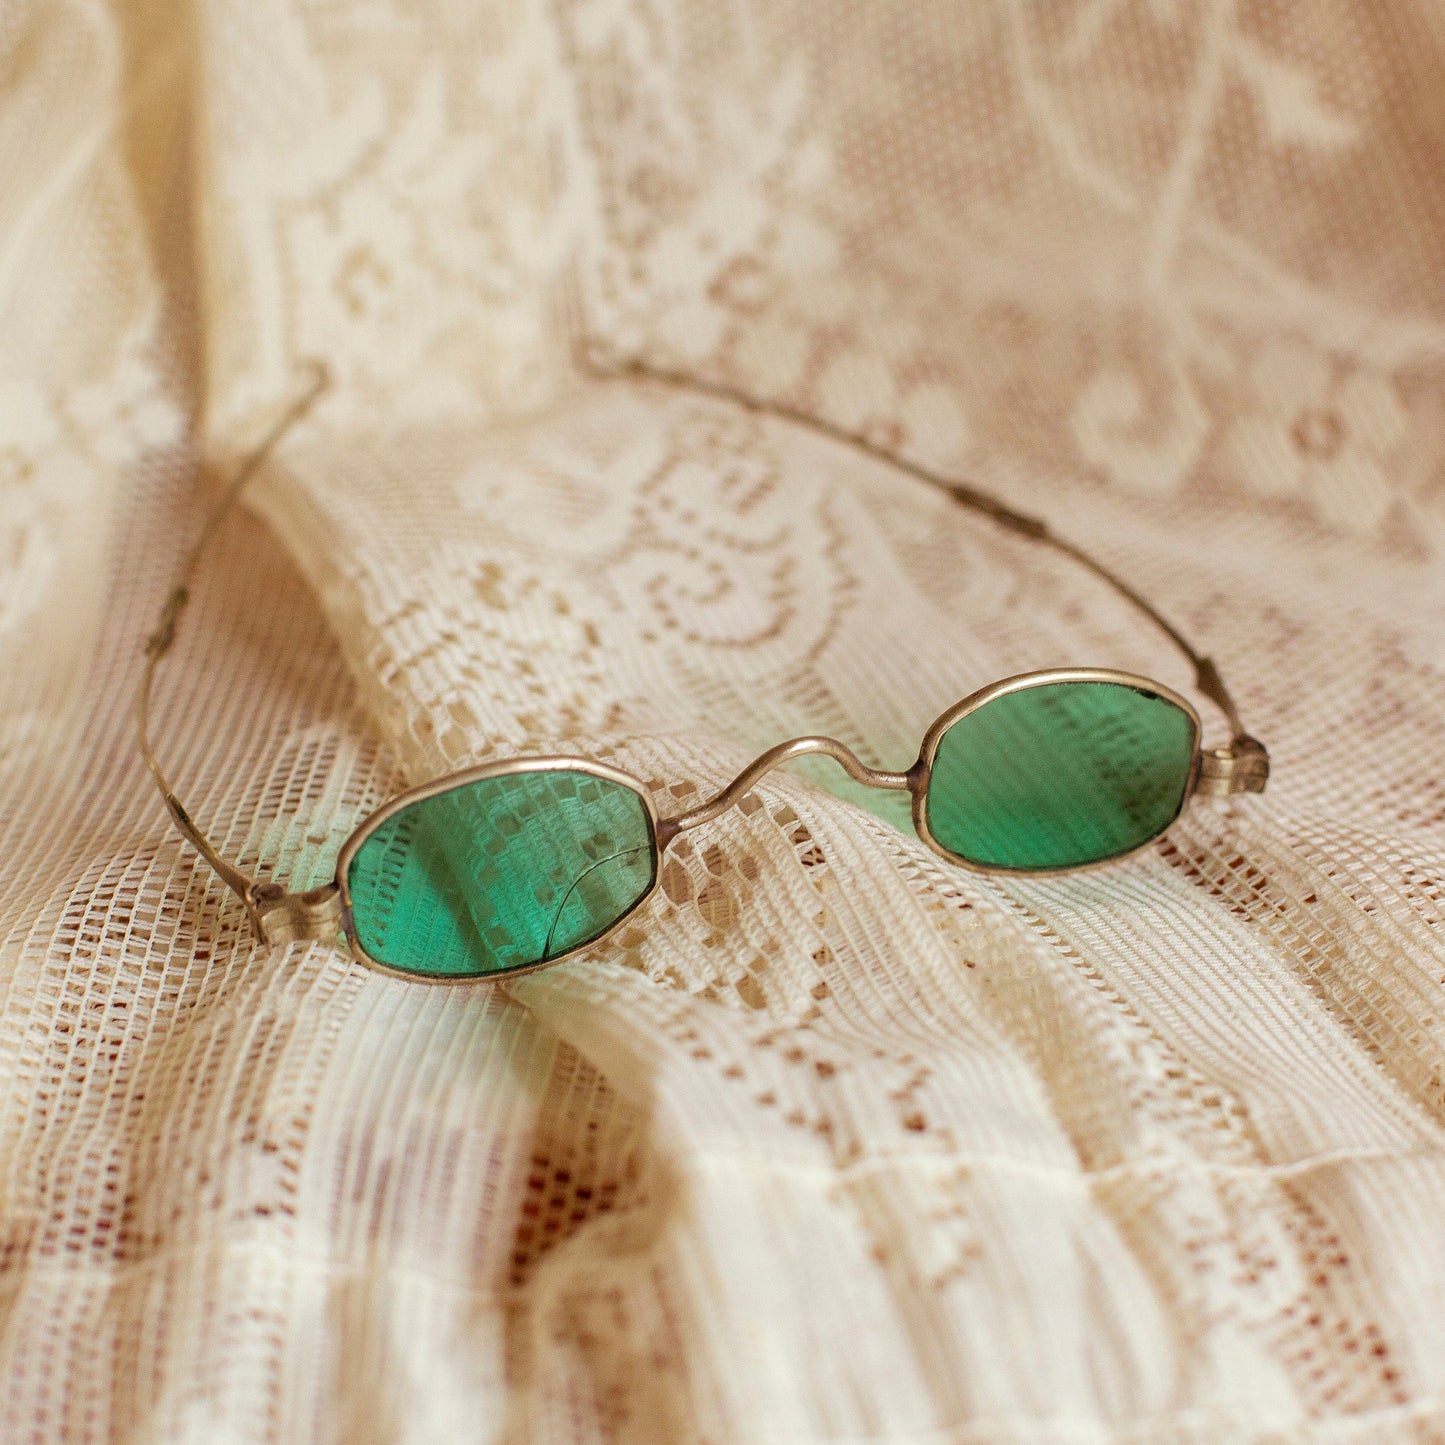 Antique 1800s Green Lens Sunglasses